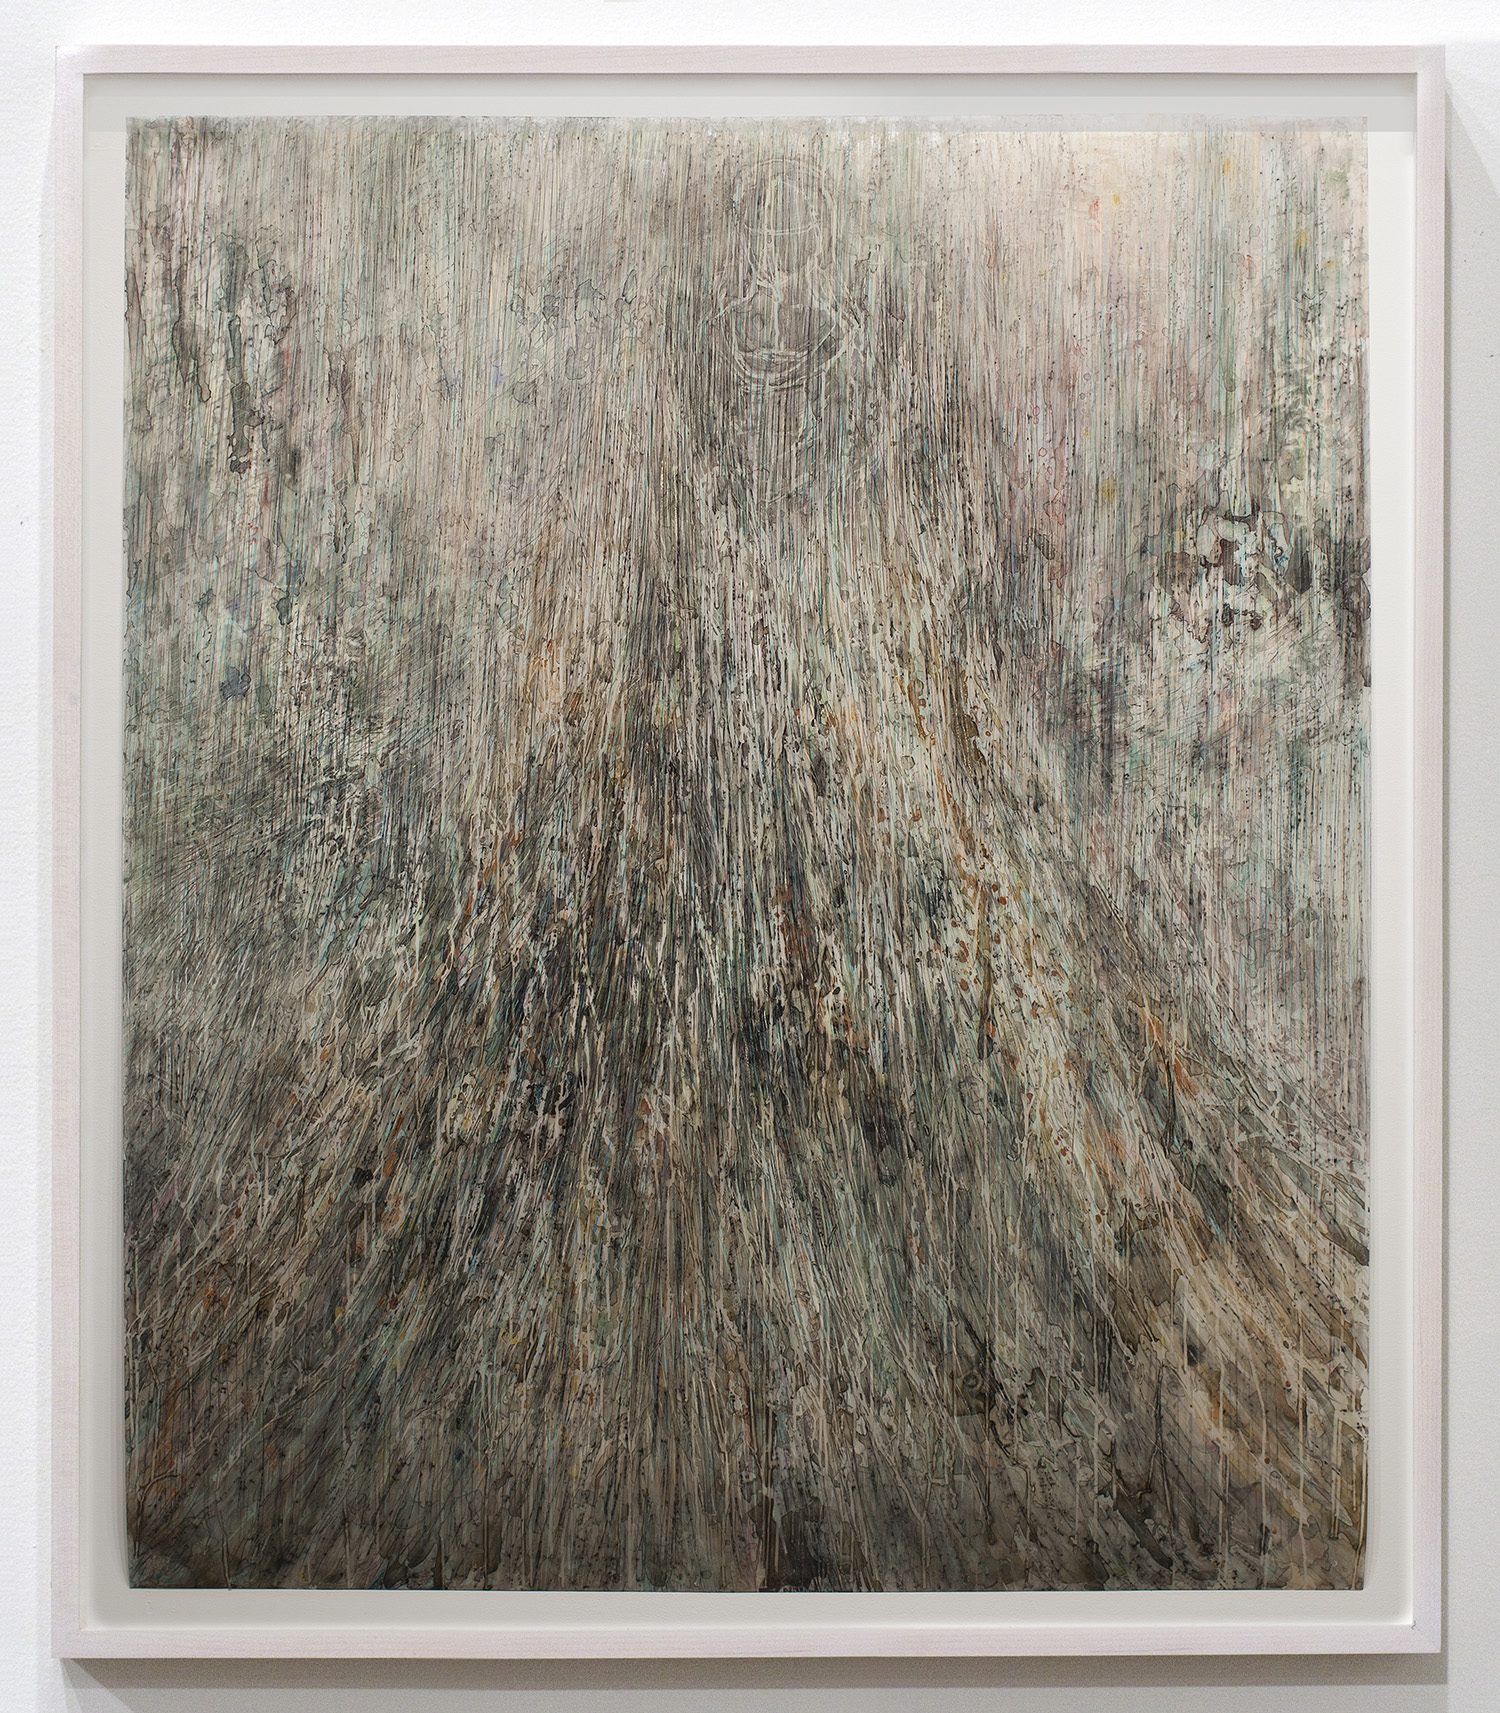 Diana Al-Hadid, Untitled, 2015, Moran Moran Gallery